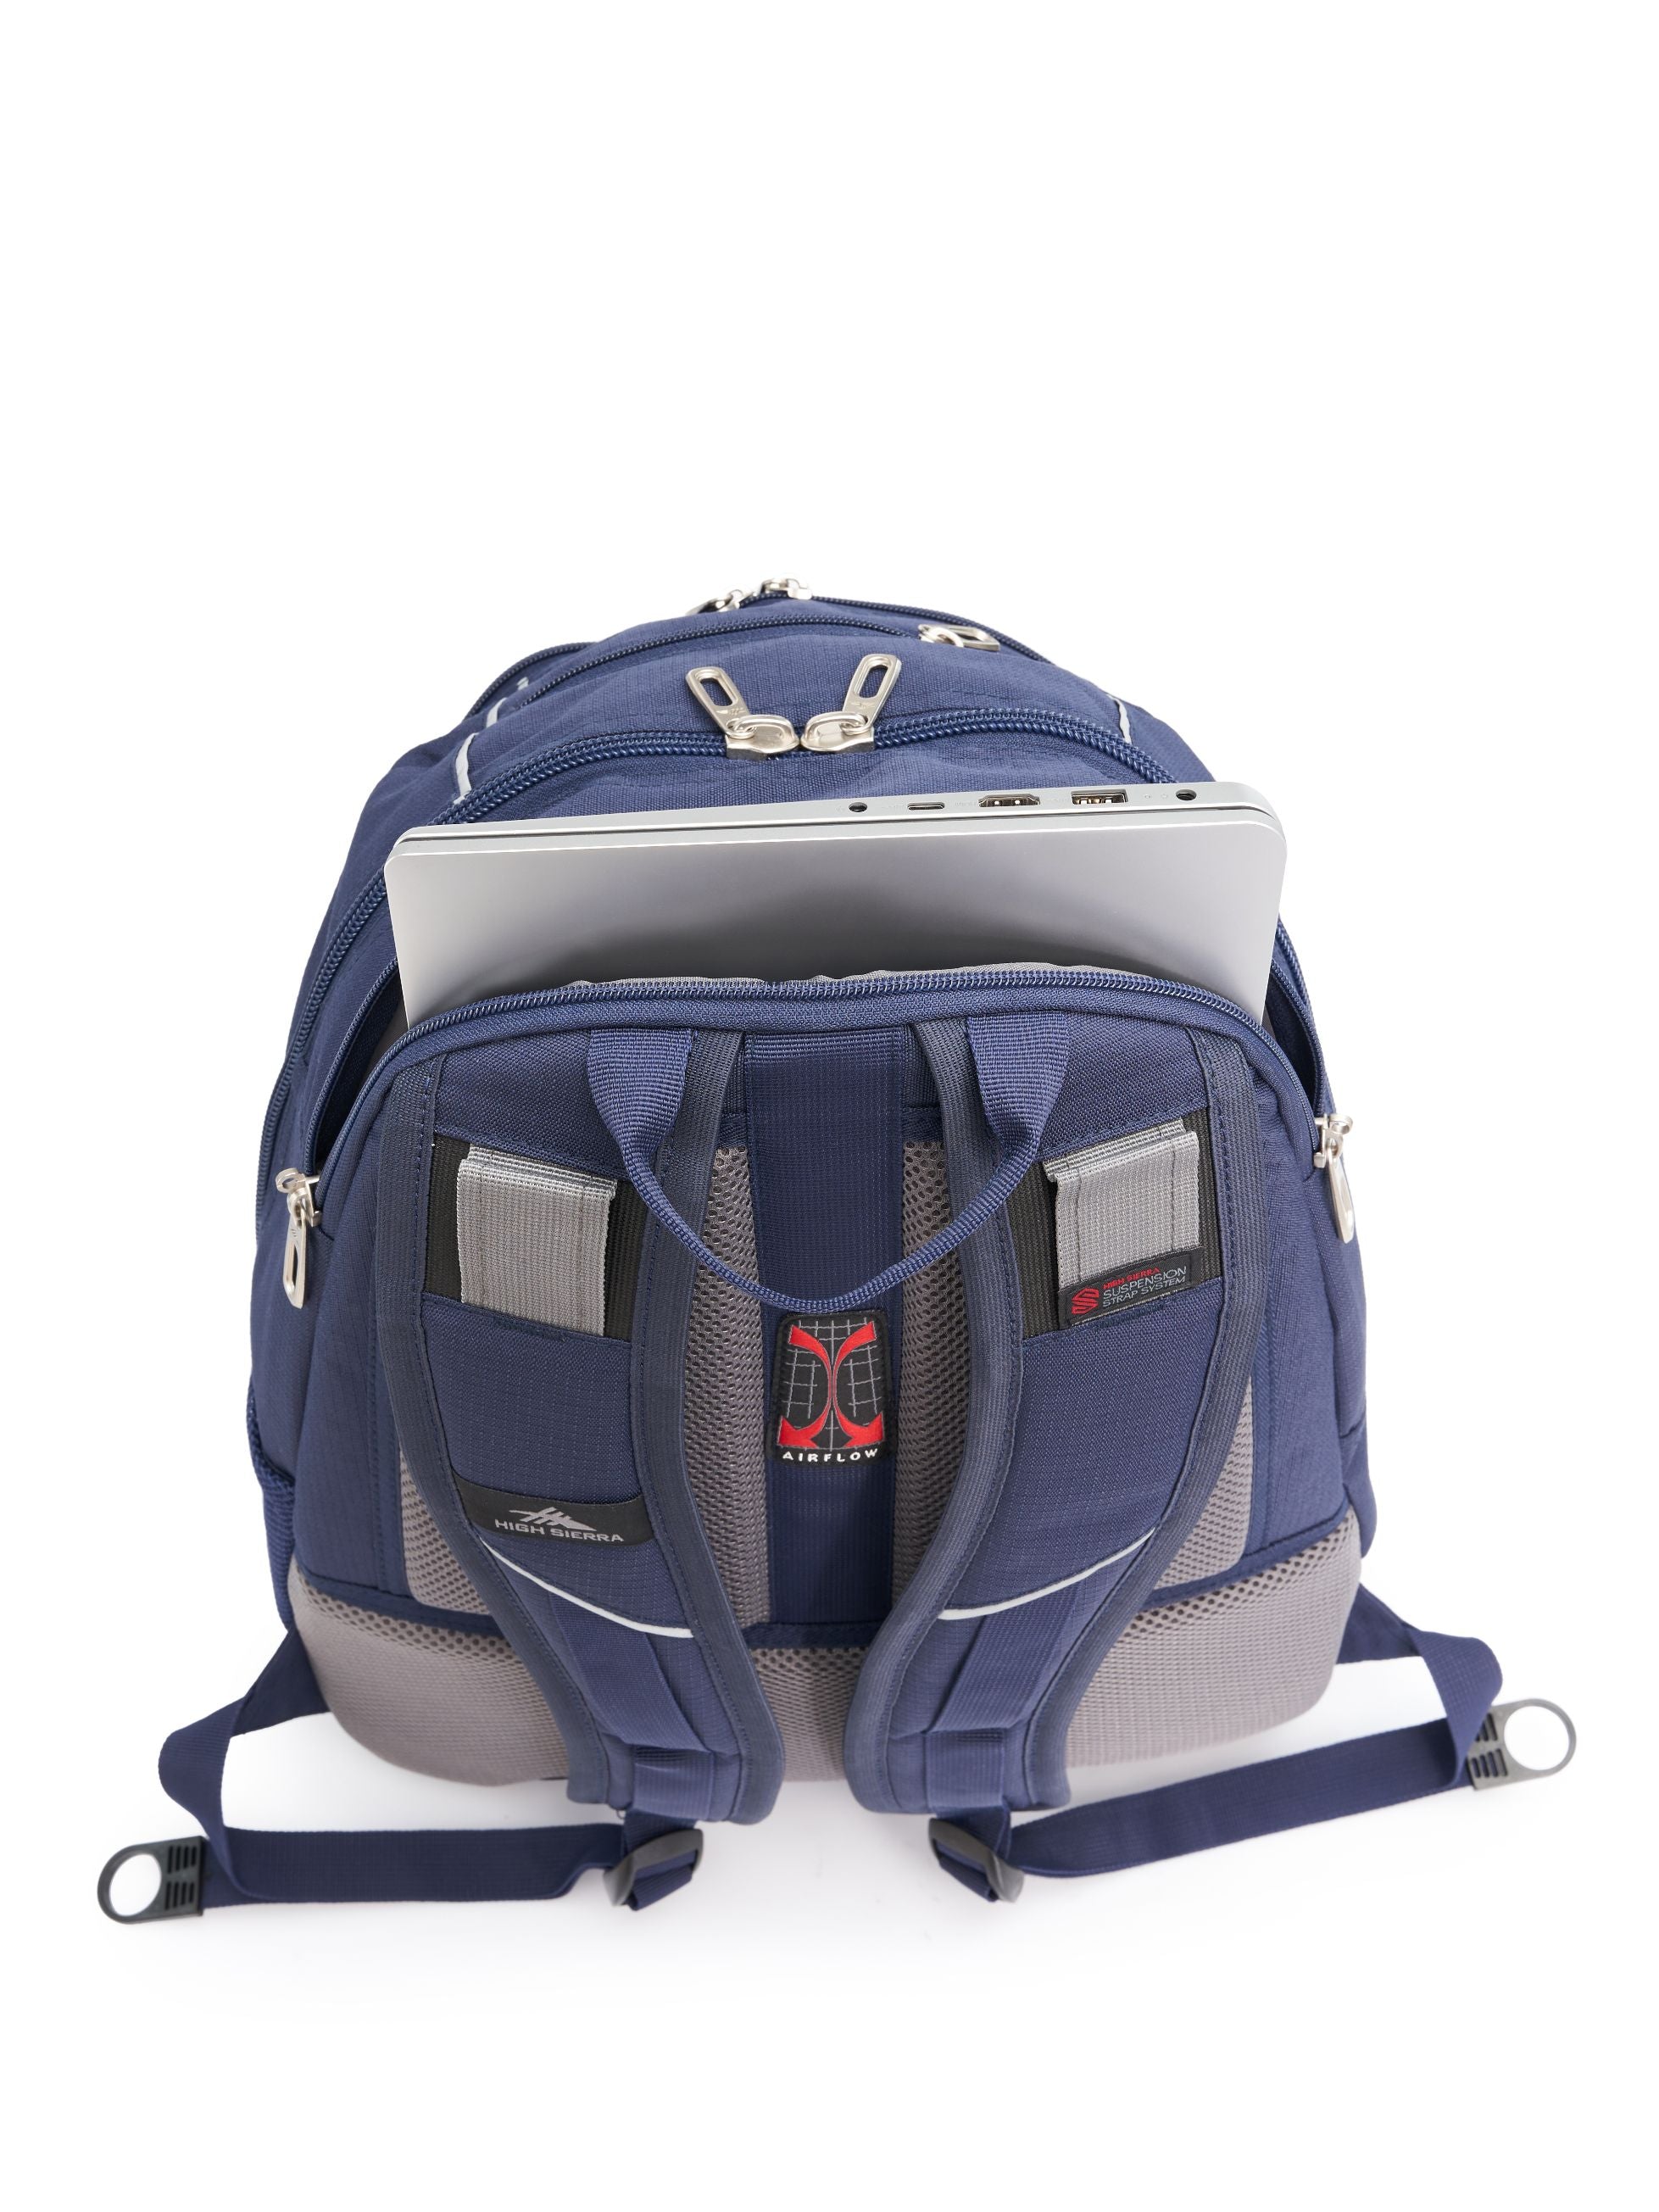 High Sierra - Academy 3.0 Backpack - Marine Blue-5